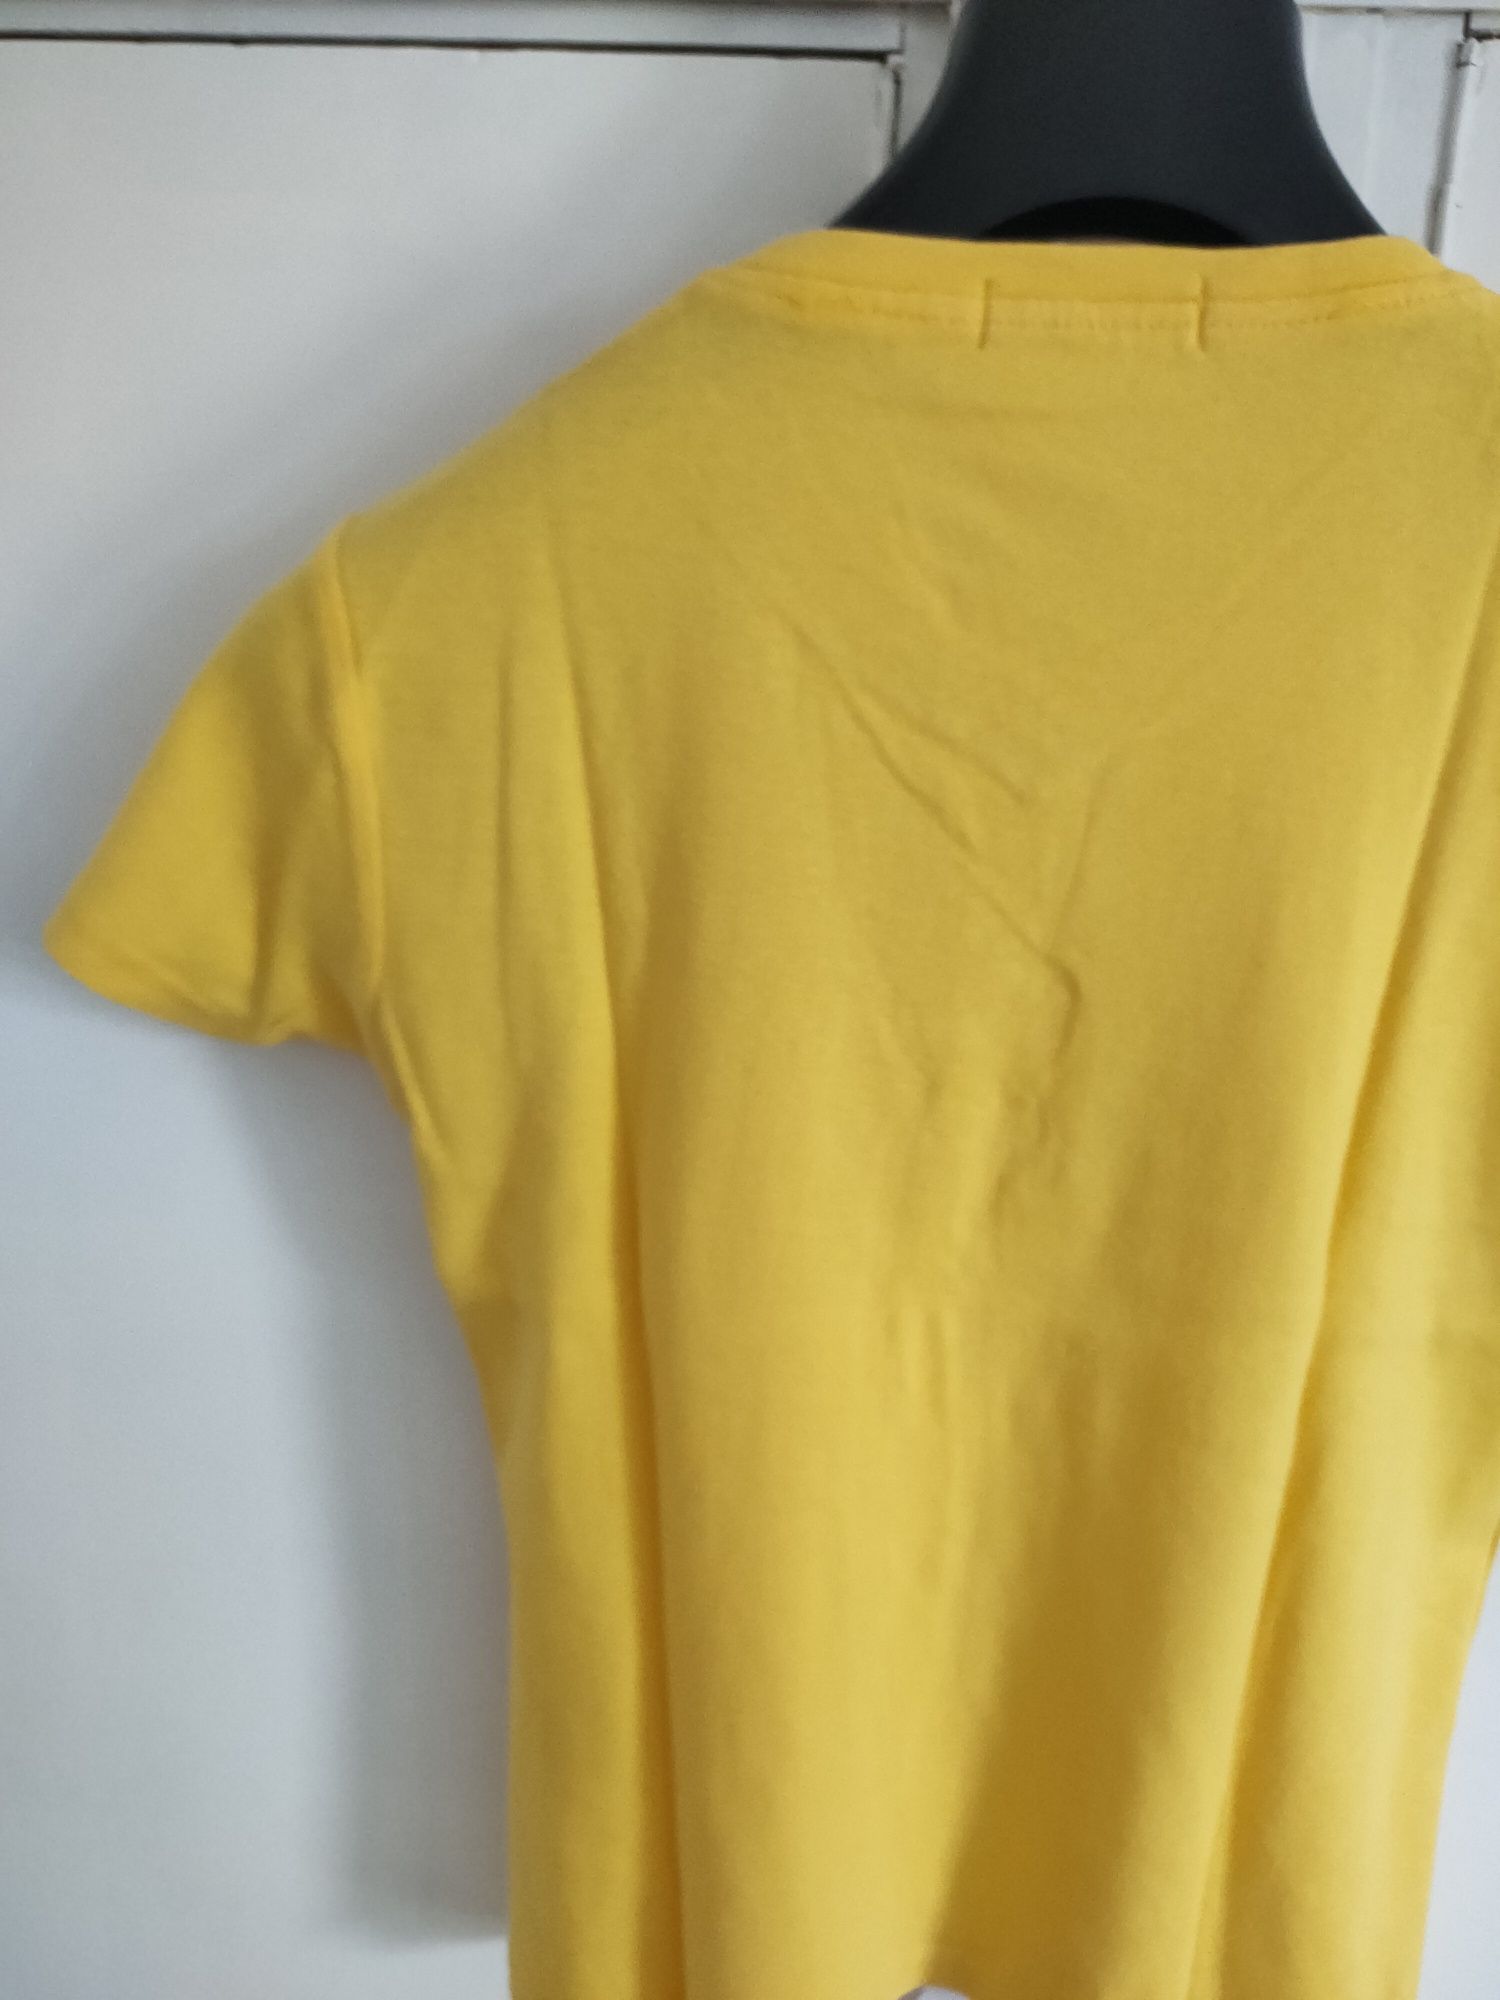 Żółta bluzka Terranova rozmiar M/L